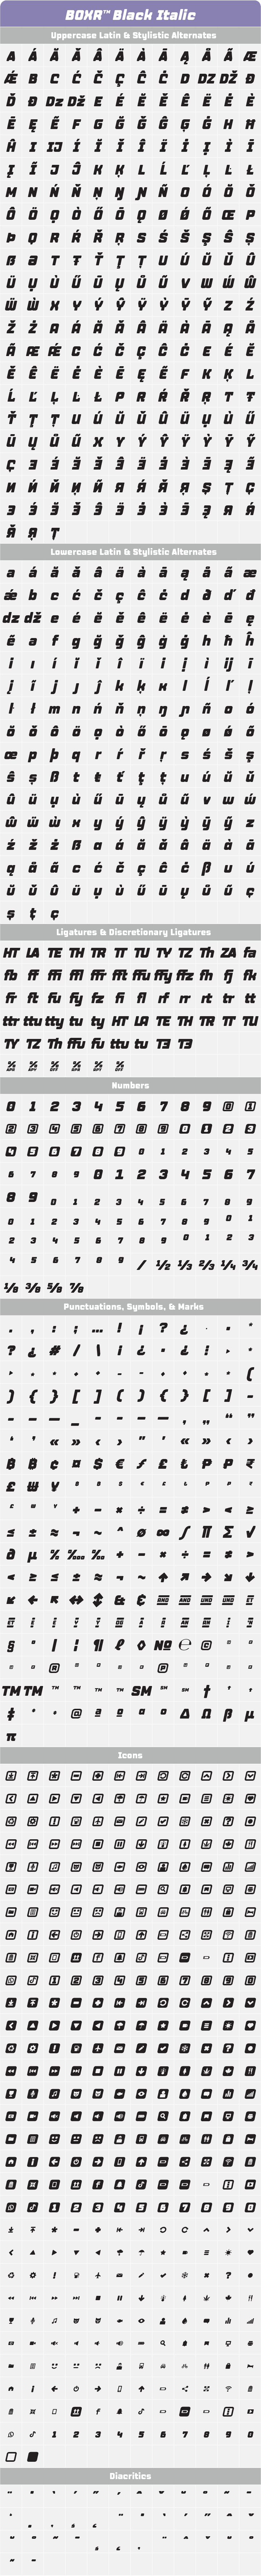 Boxr-Fonts-Black-Italic-Glyph-Tables.png